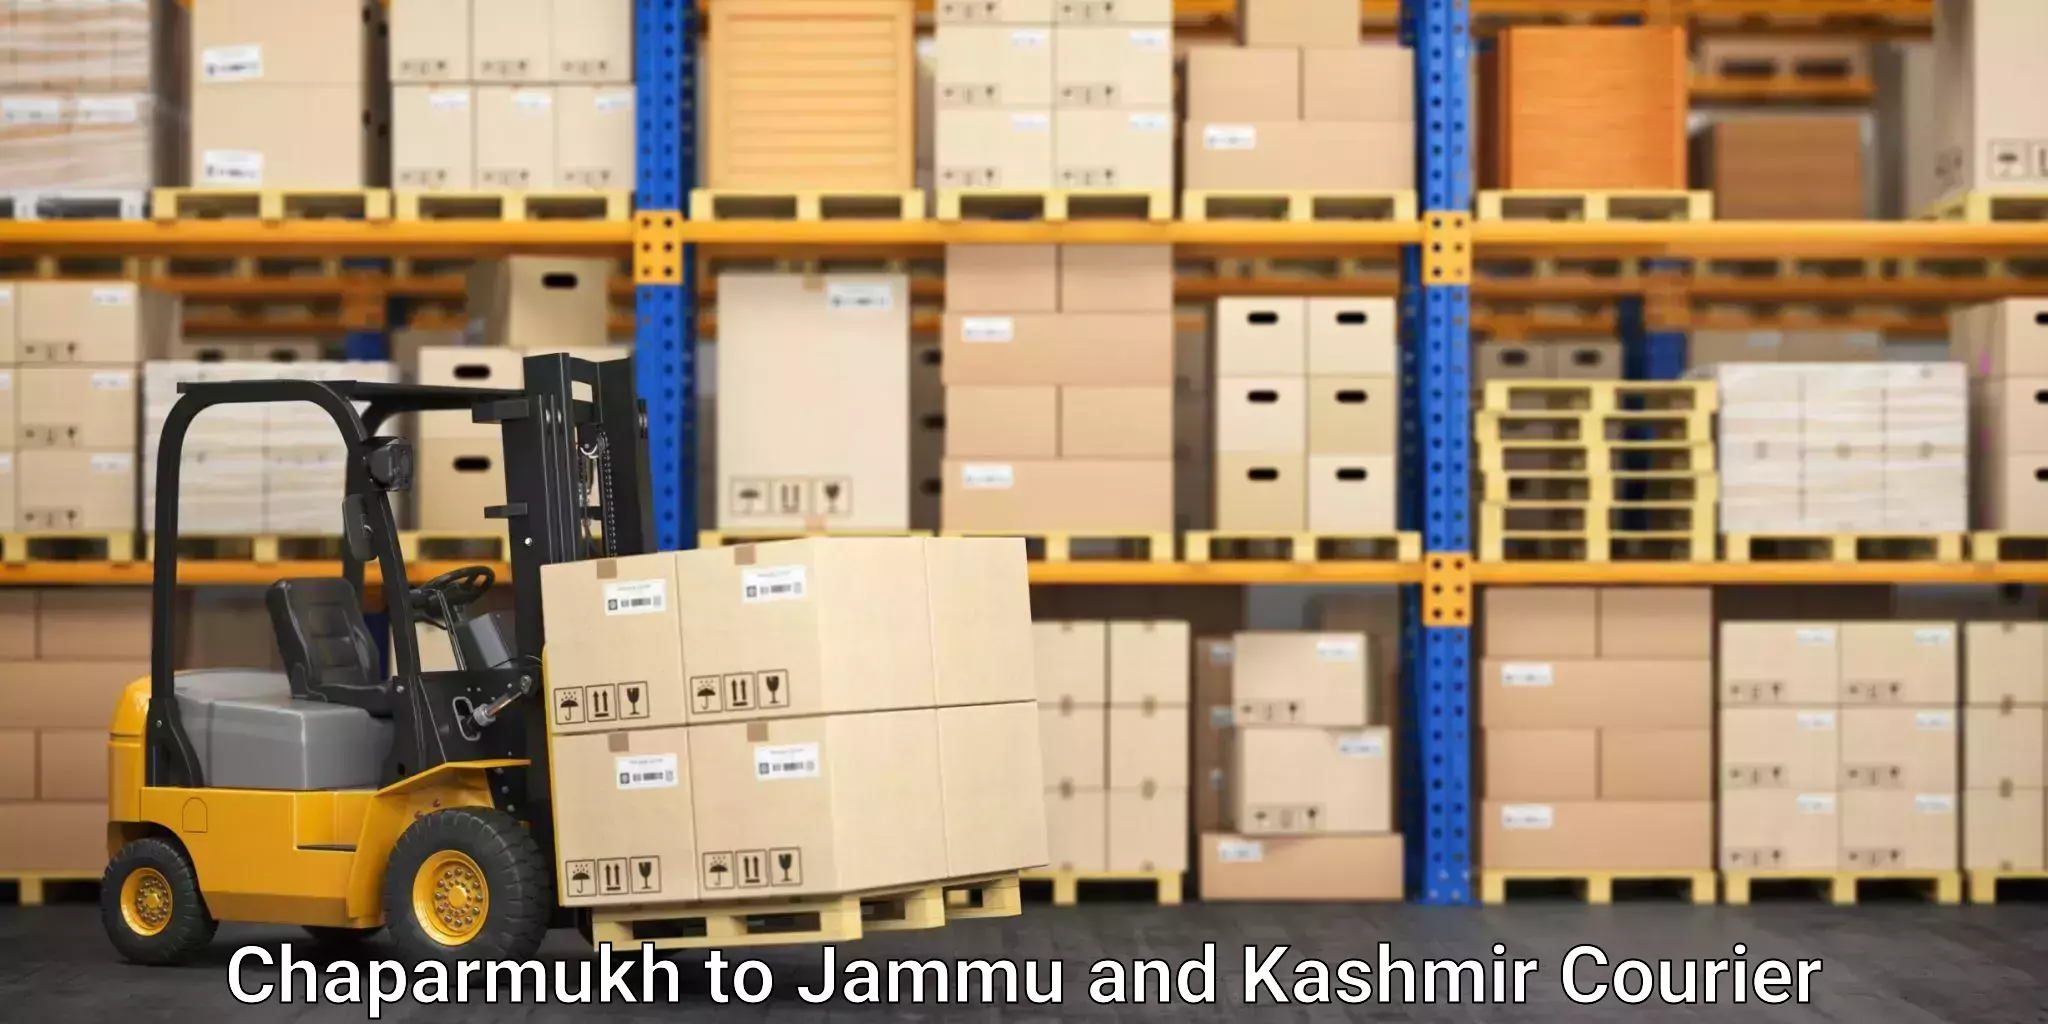 Tech-enabled shipping Chaparmukh to Shopian